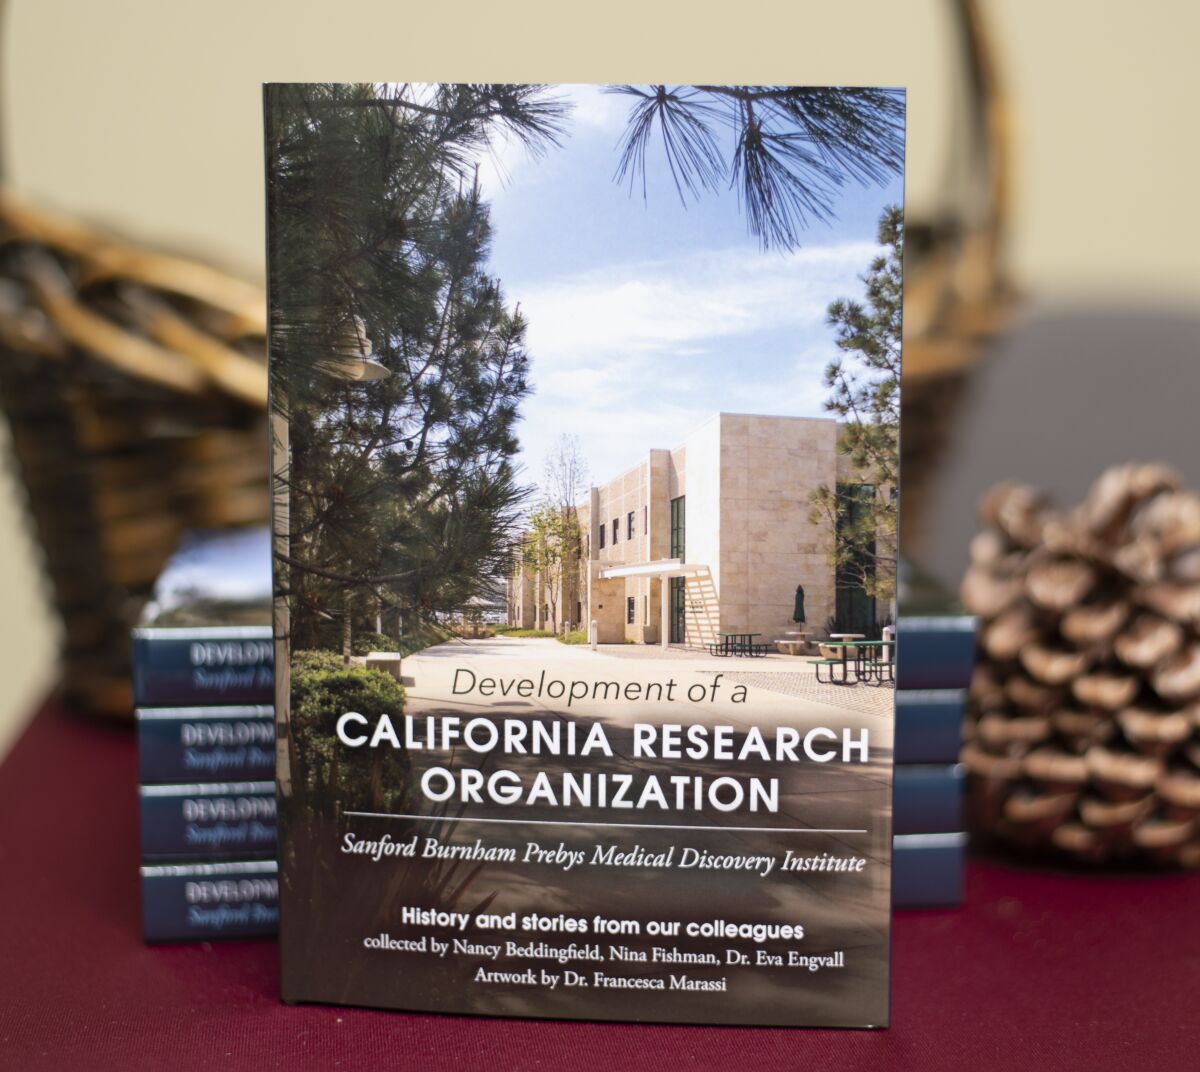 "Development of a California Research Organization" details the memoirs of Sanford Burnham Prebys 